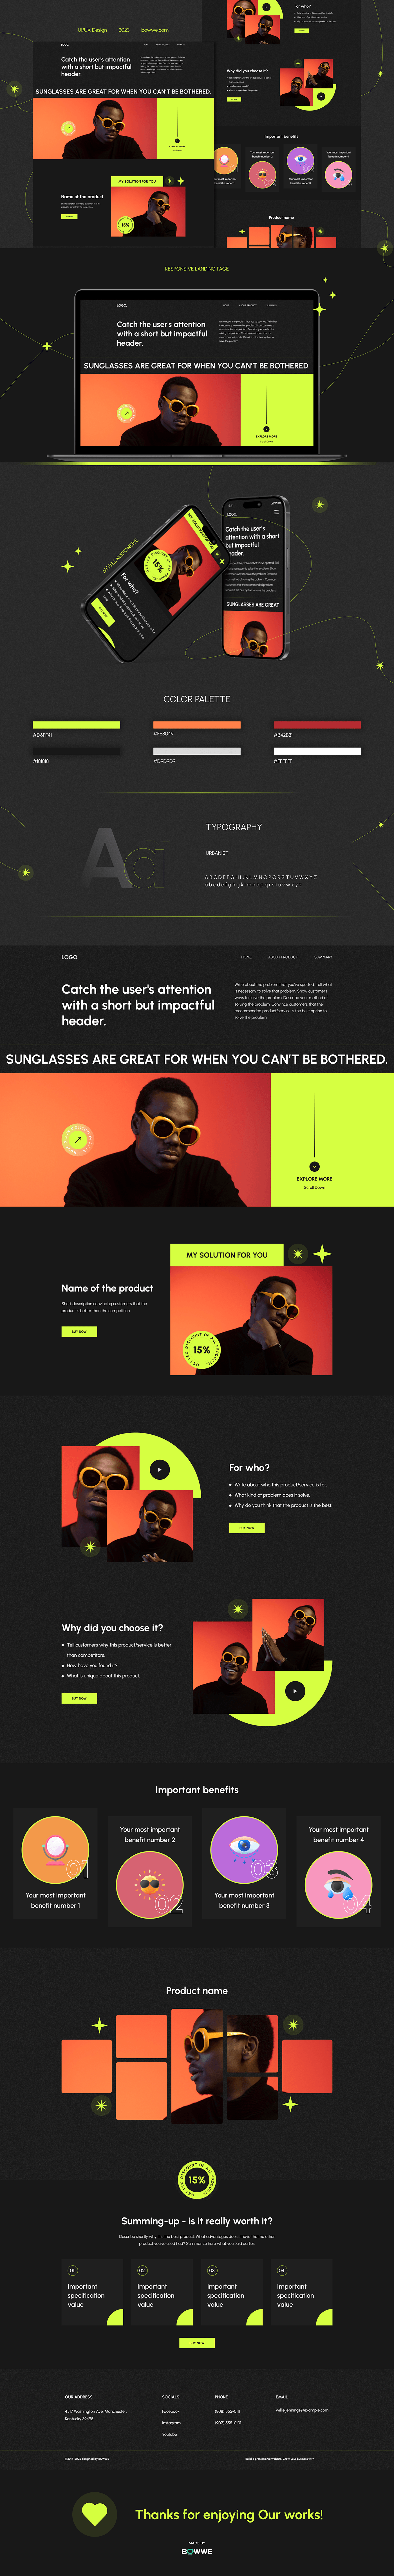 product landing page design. Free template Dark. Black, red, orange, yellow, contrast.